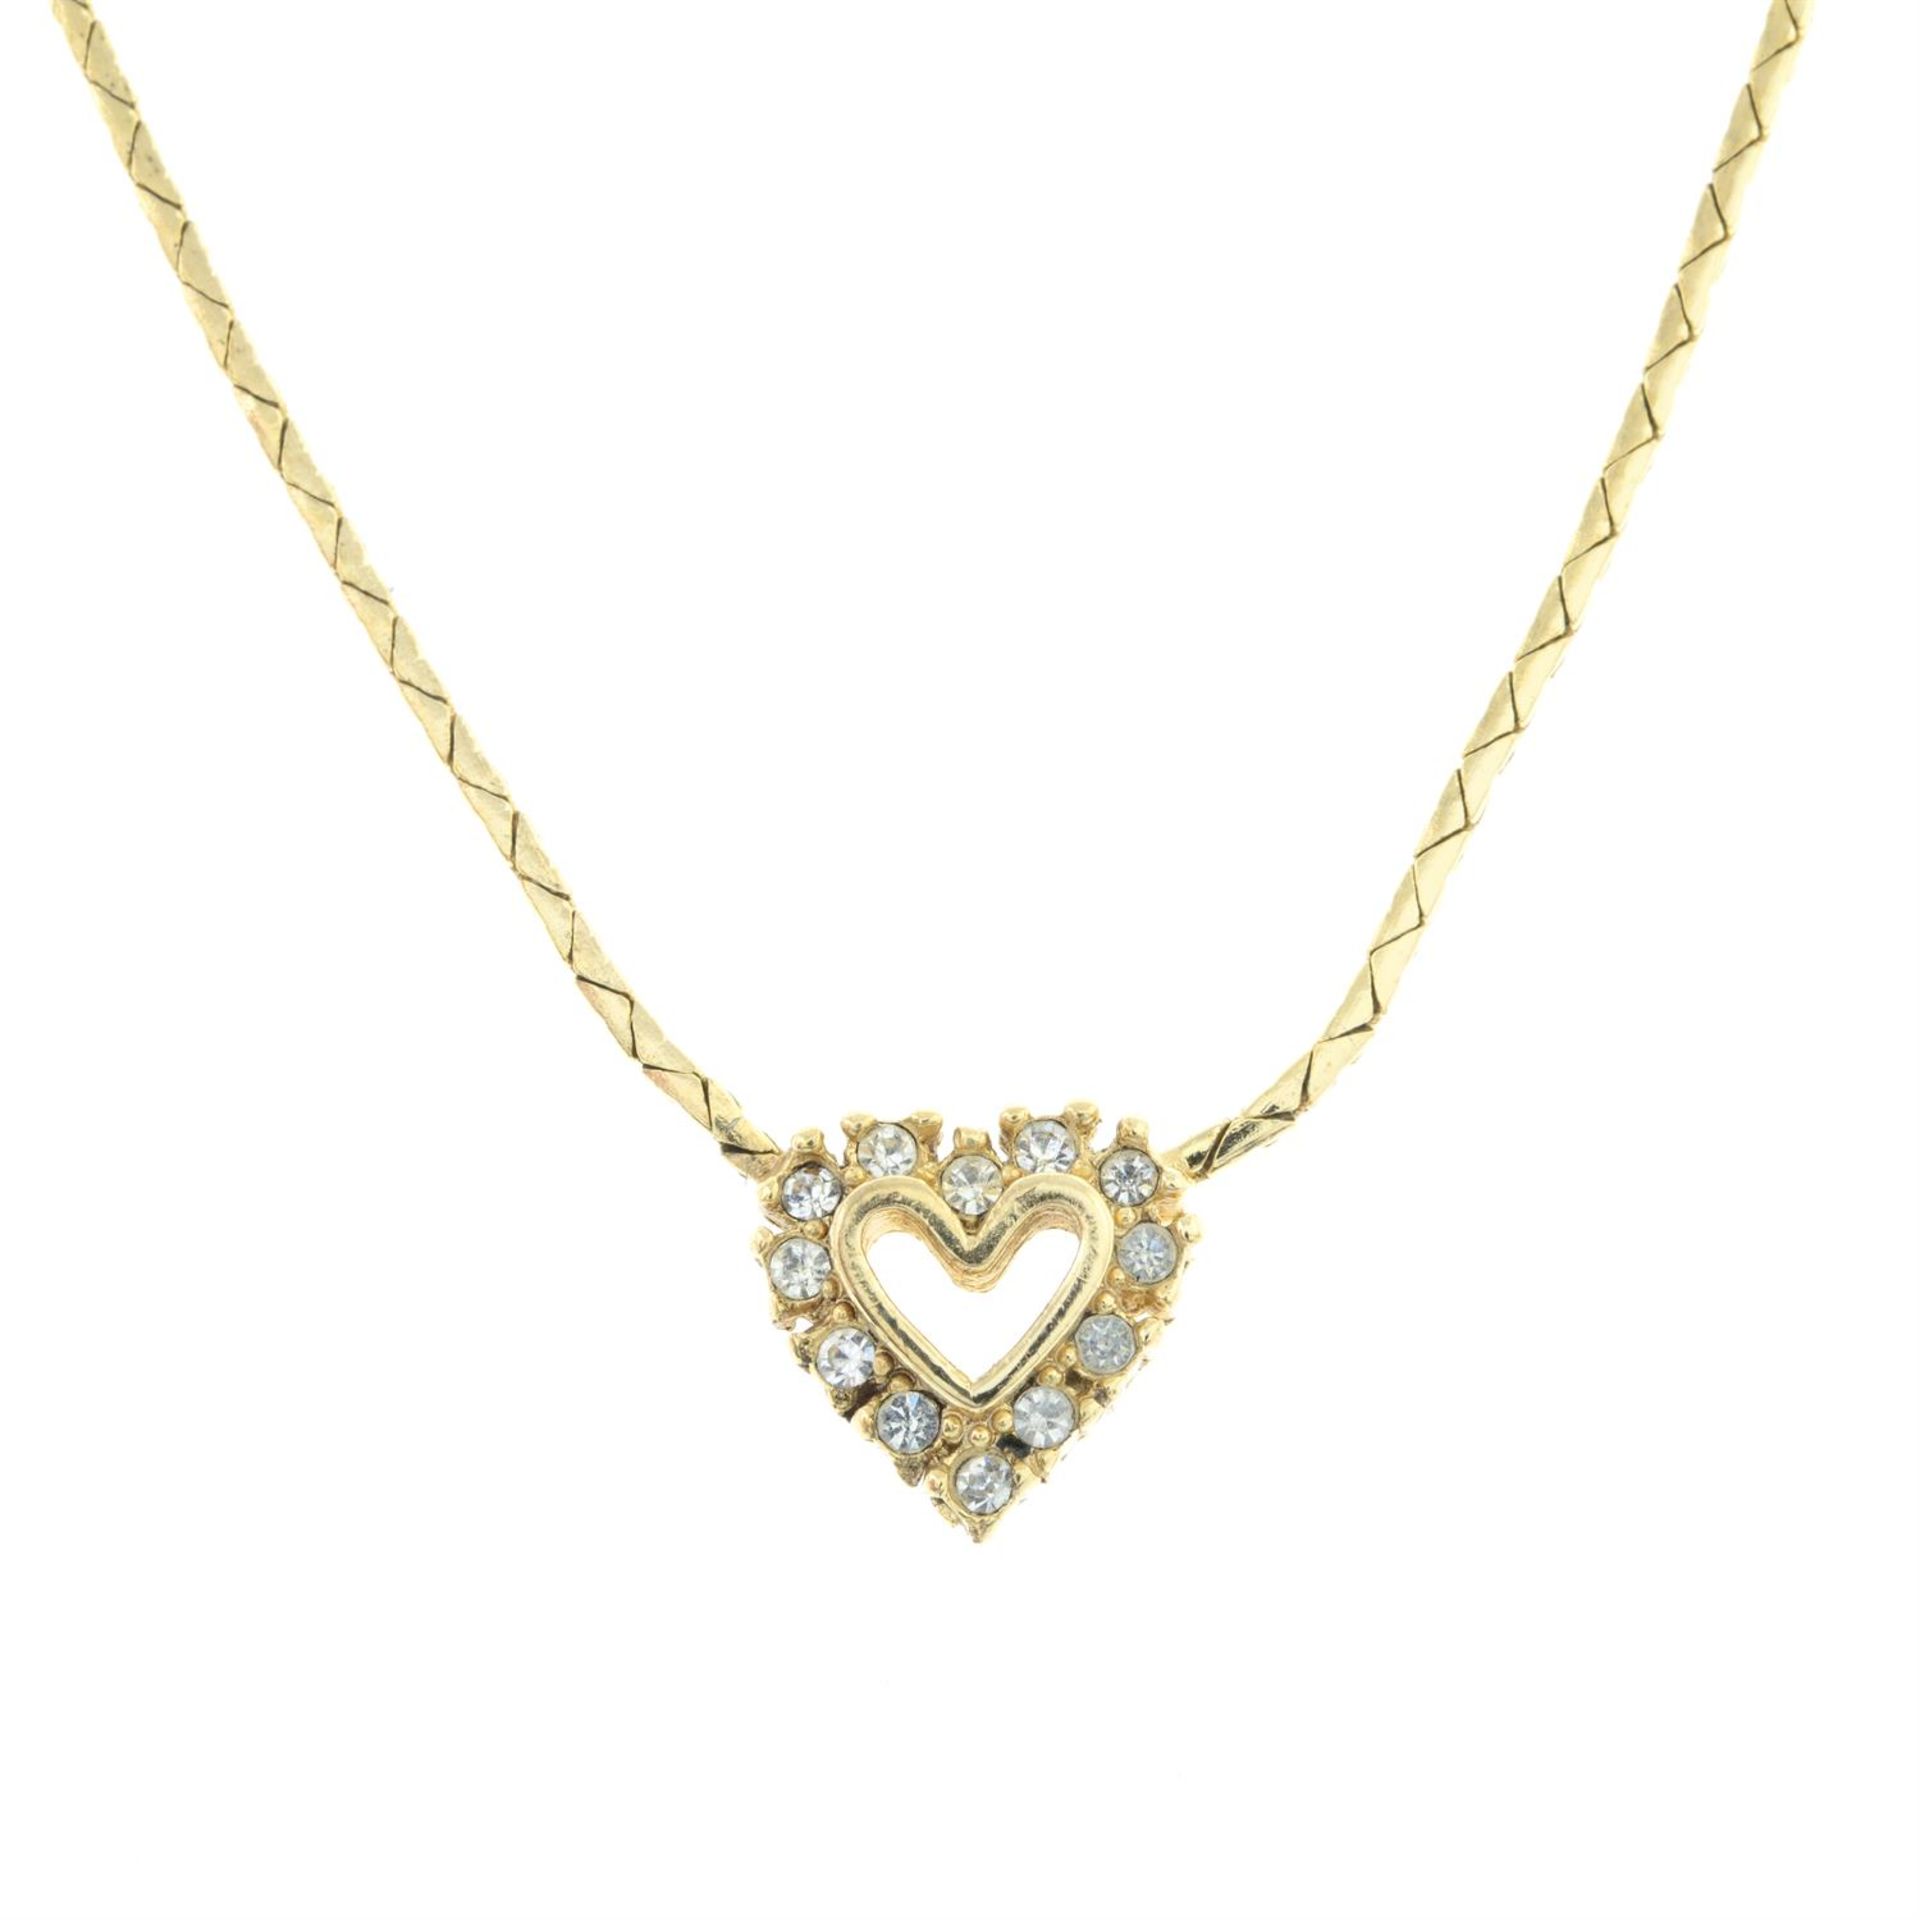 CHRISTIAN DIOR- a heart pendant necklace.